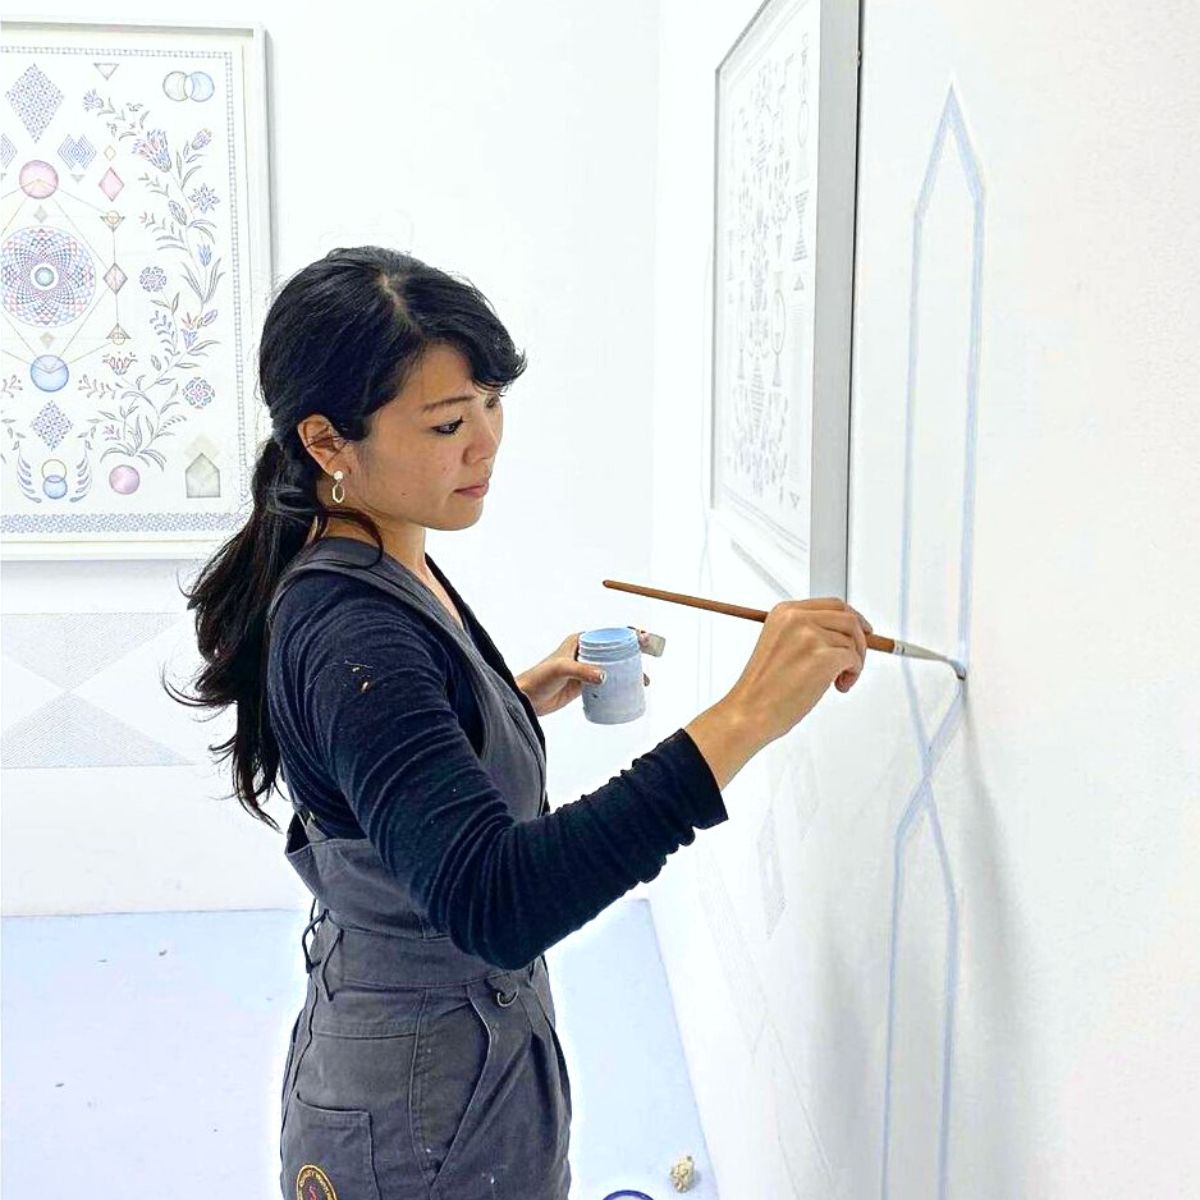 Yuria Okamura painting a mural of plant art